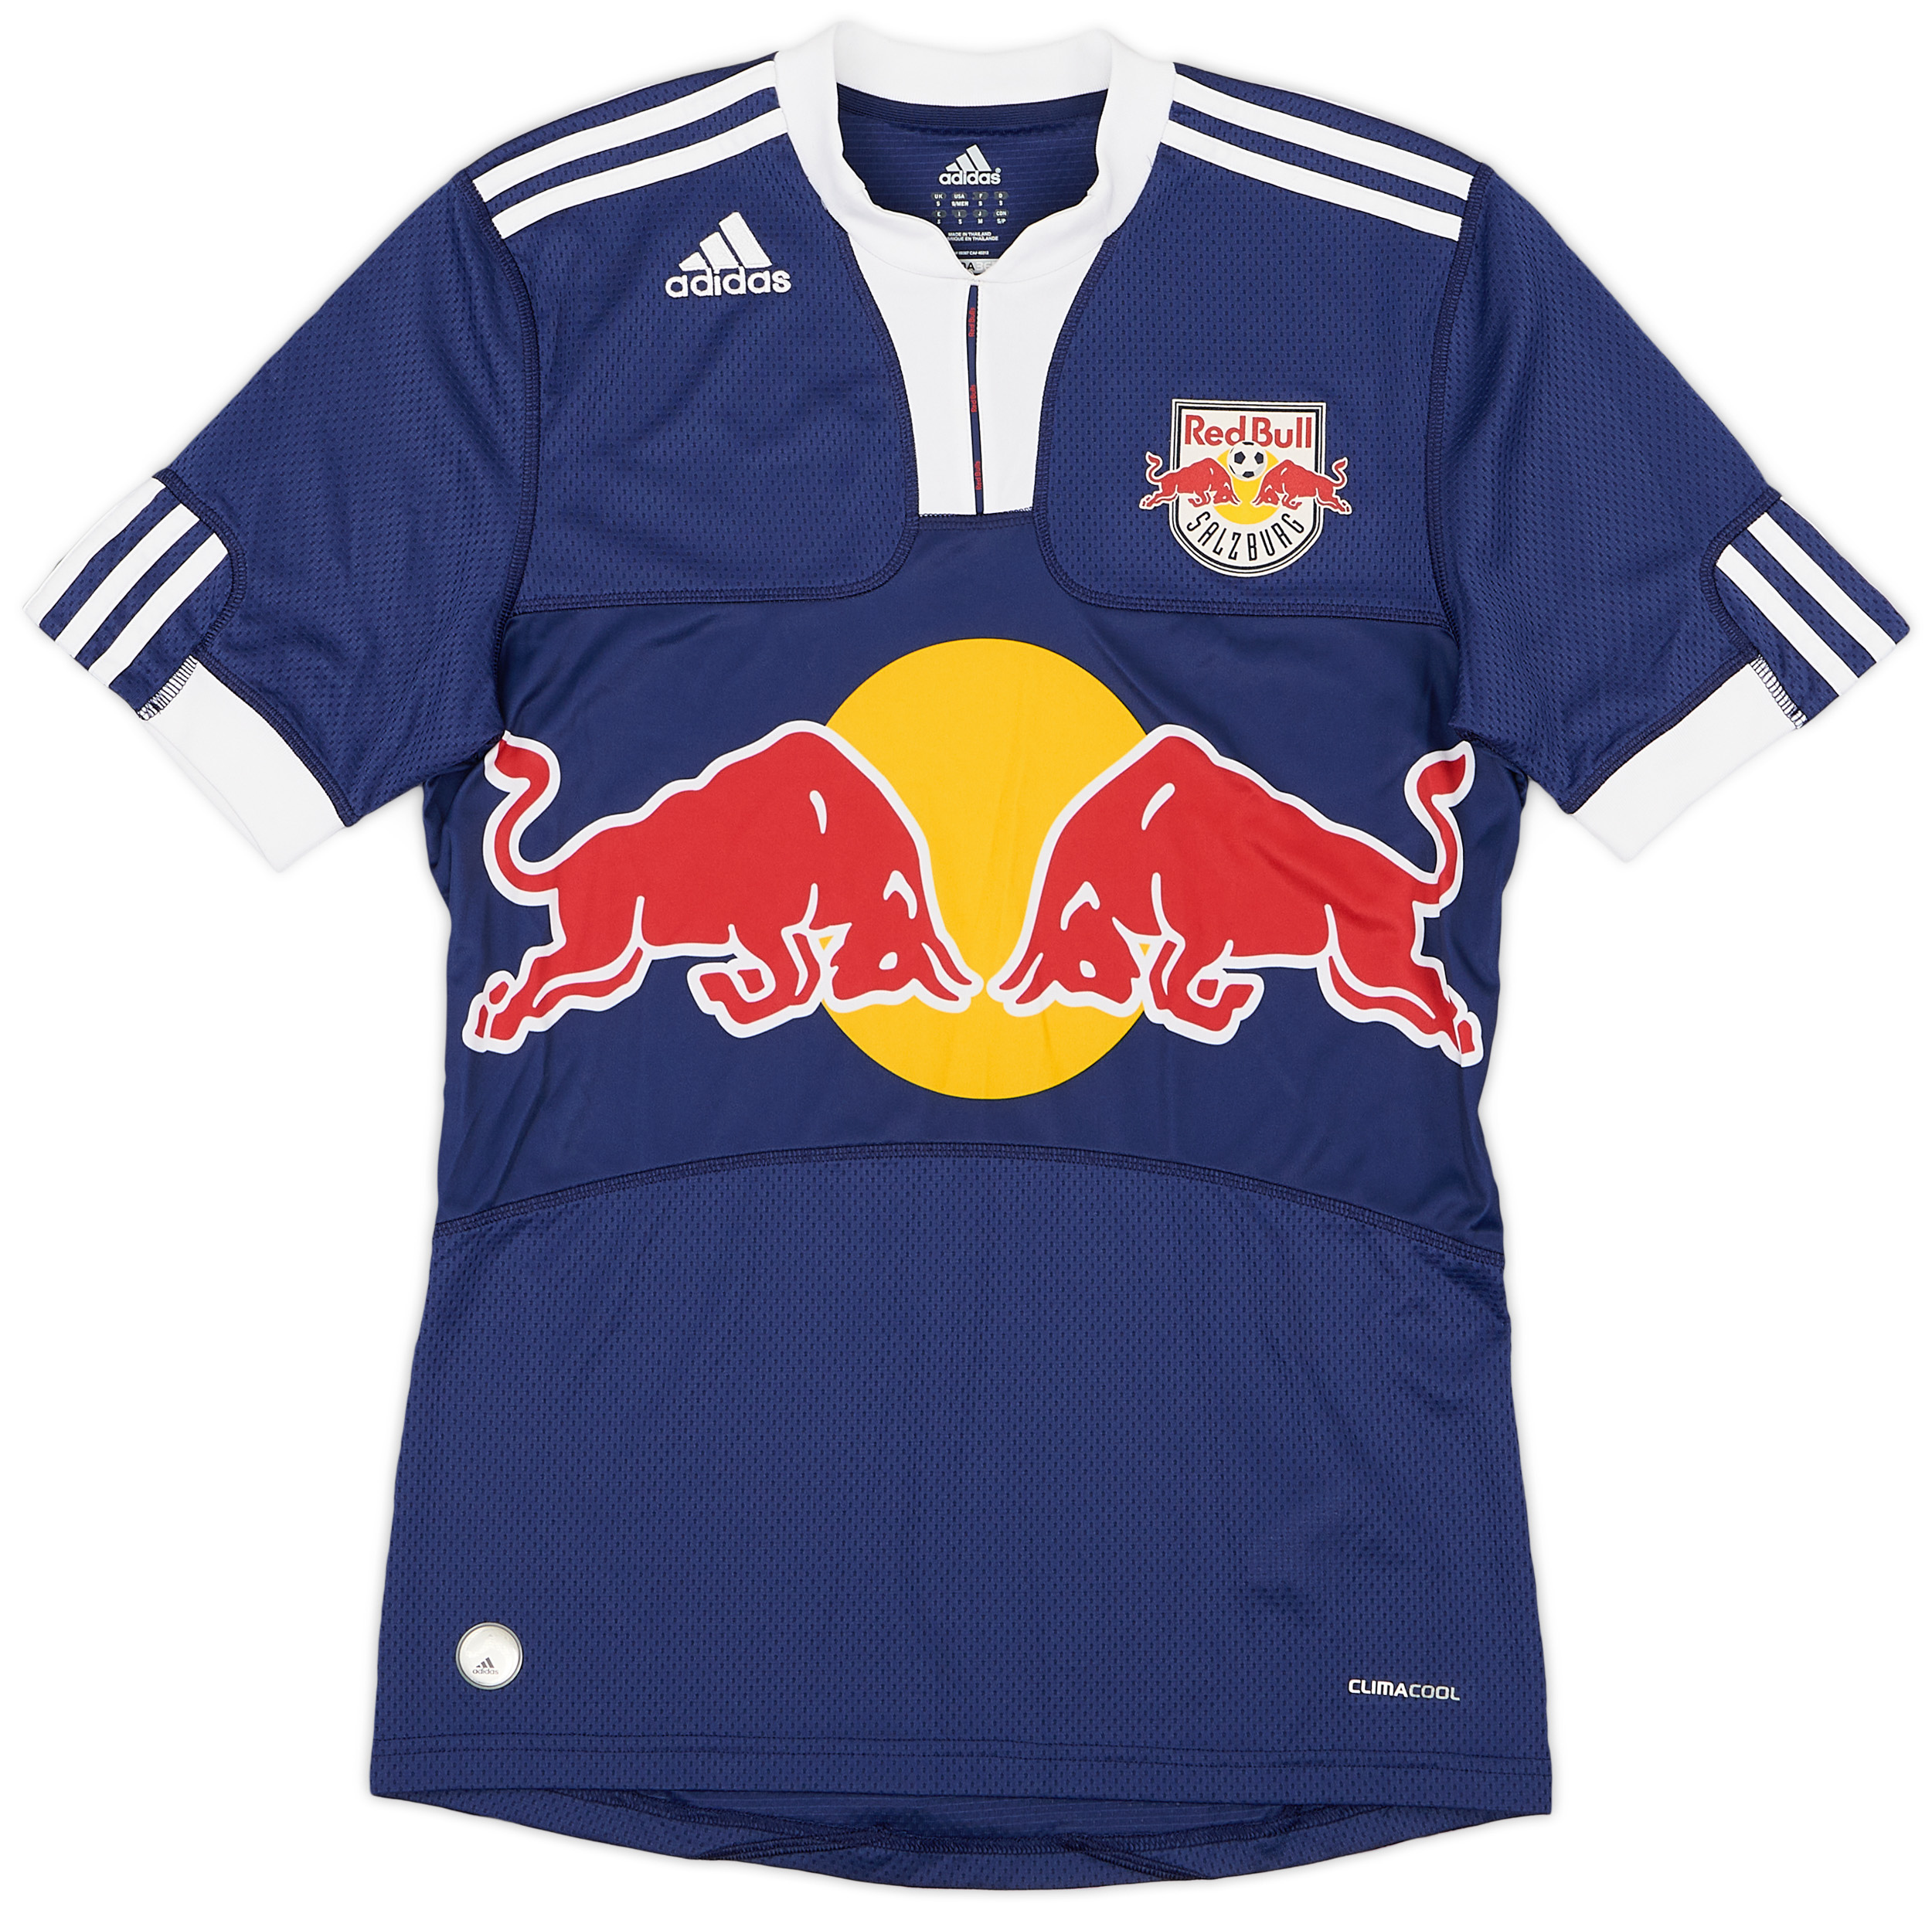 2009-10 Red Bull Salzburg Away Shirt - 9/10 - ()